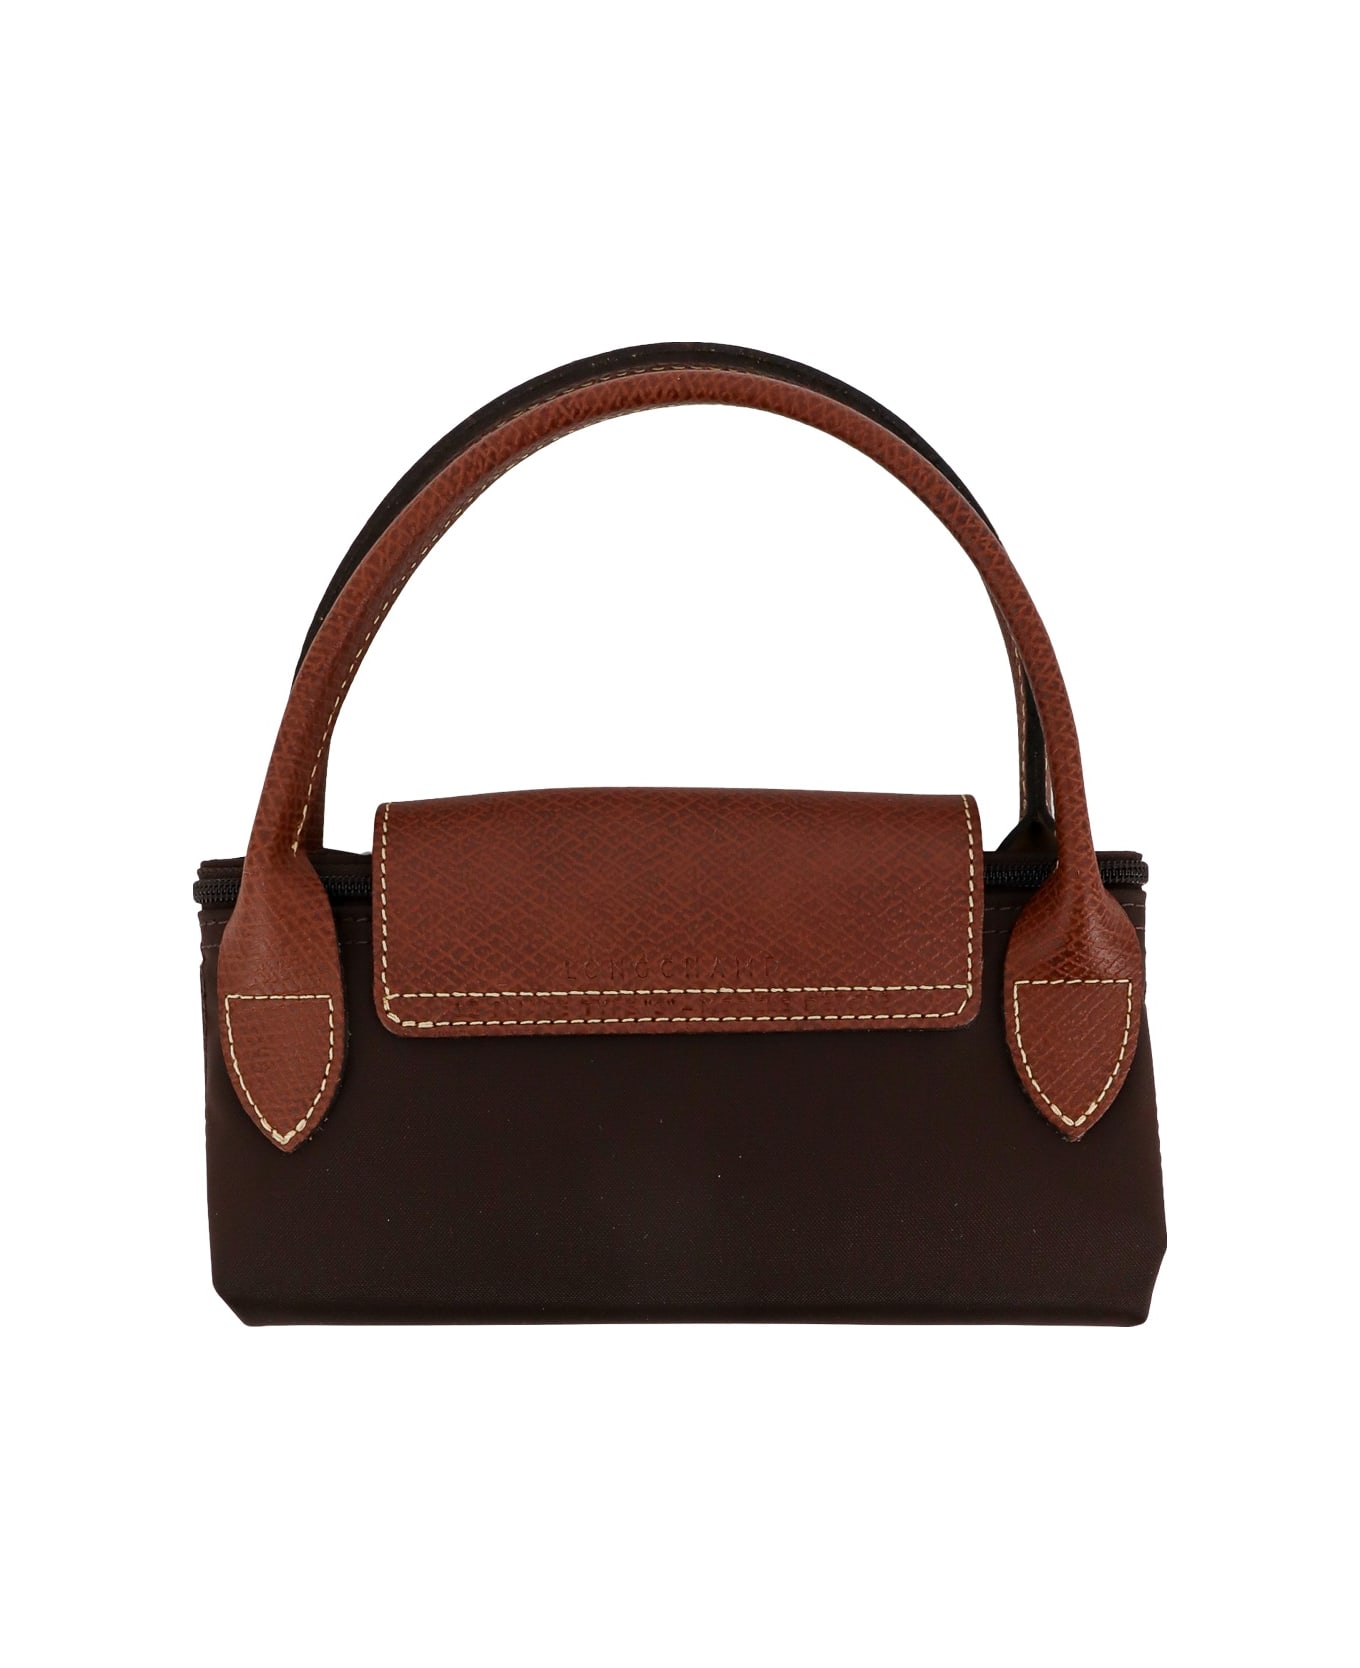 Longchamp Le Pliage Handbag - Brown